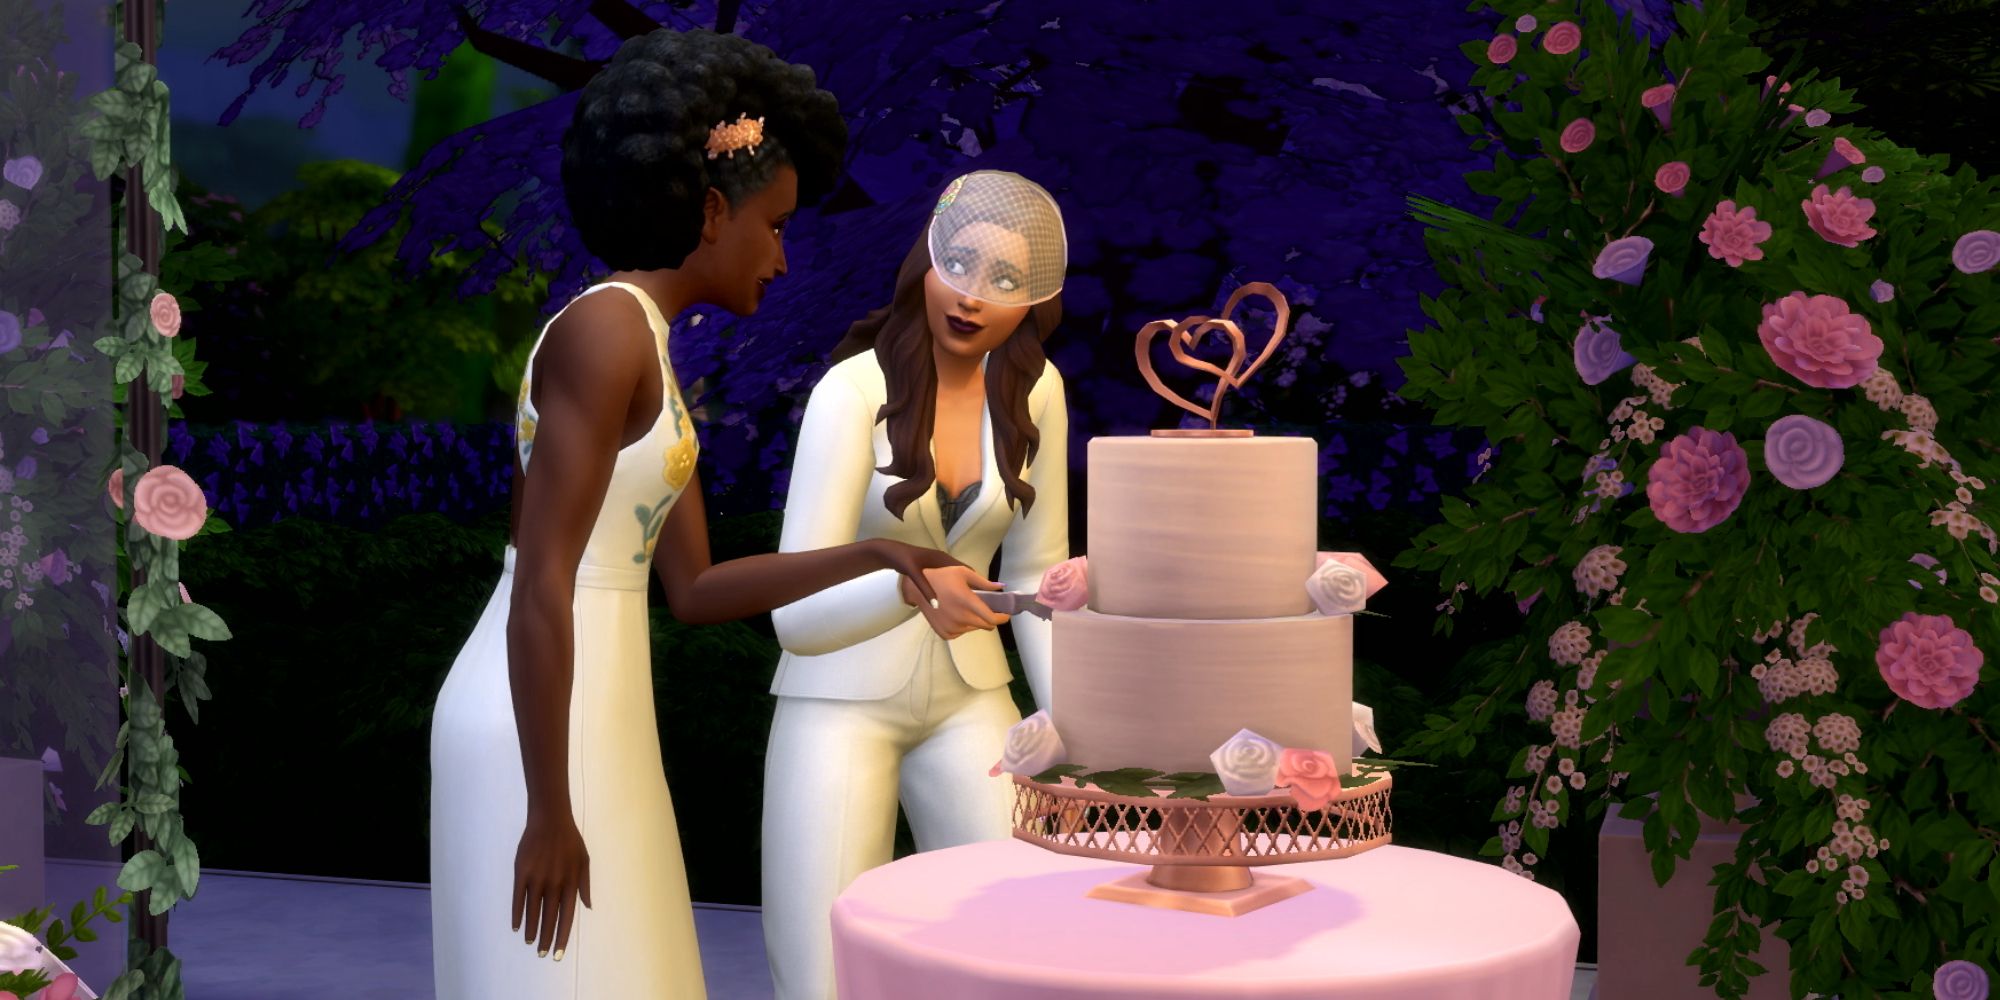 Sims 4 wedding stories gay couple cake